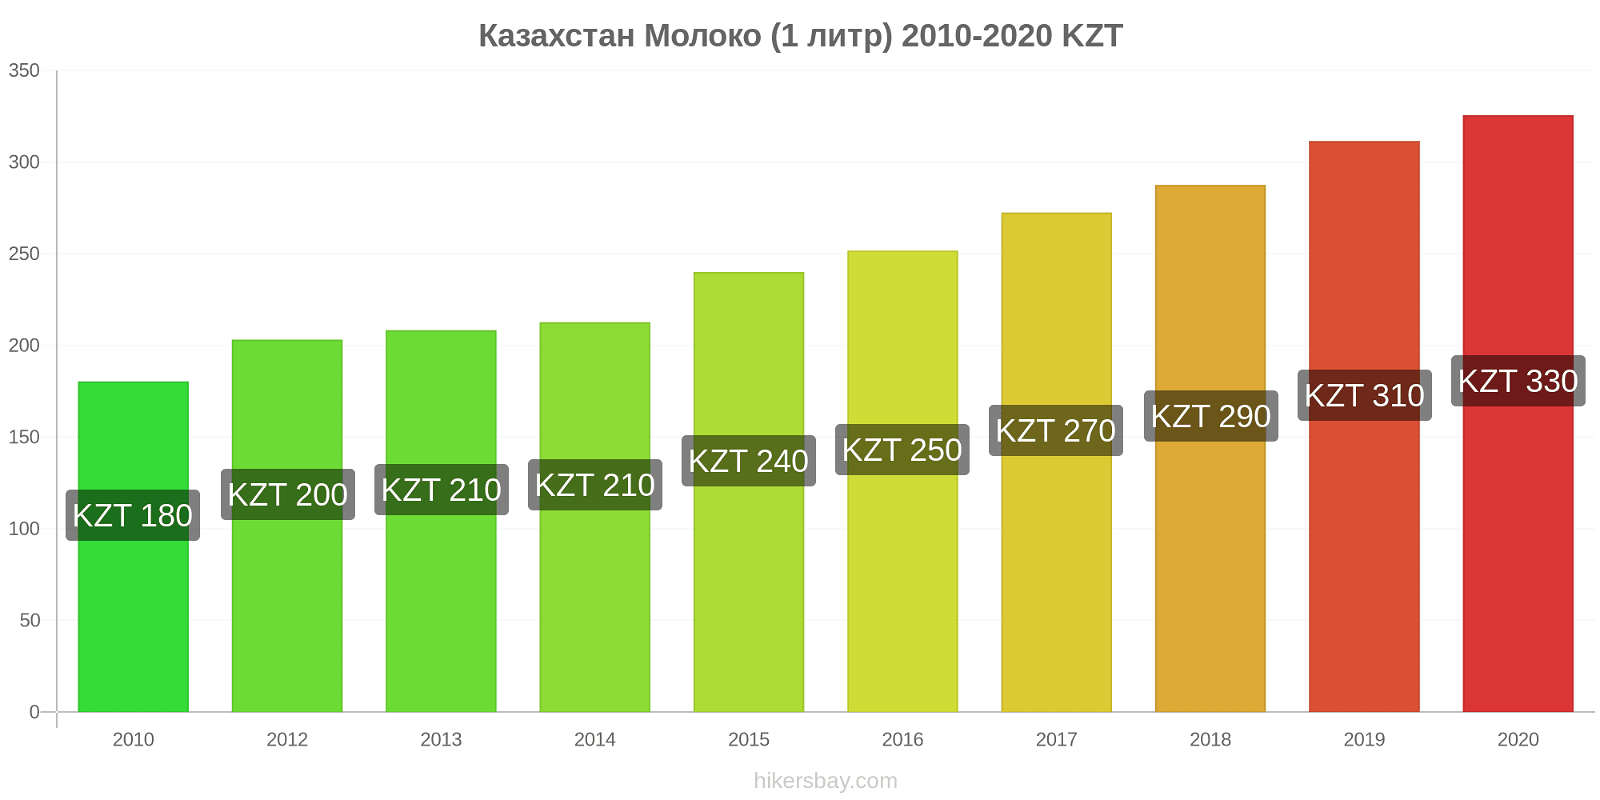 Казахстан изменения цен Молоко (1 литр) hikersbay.com